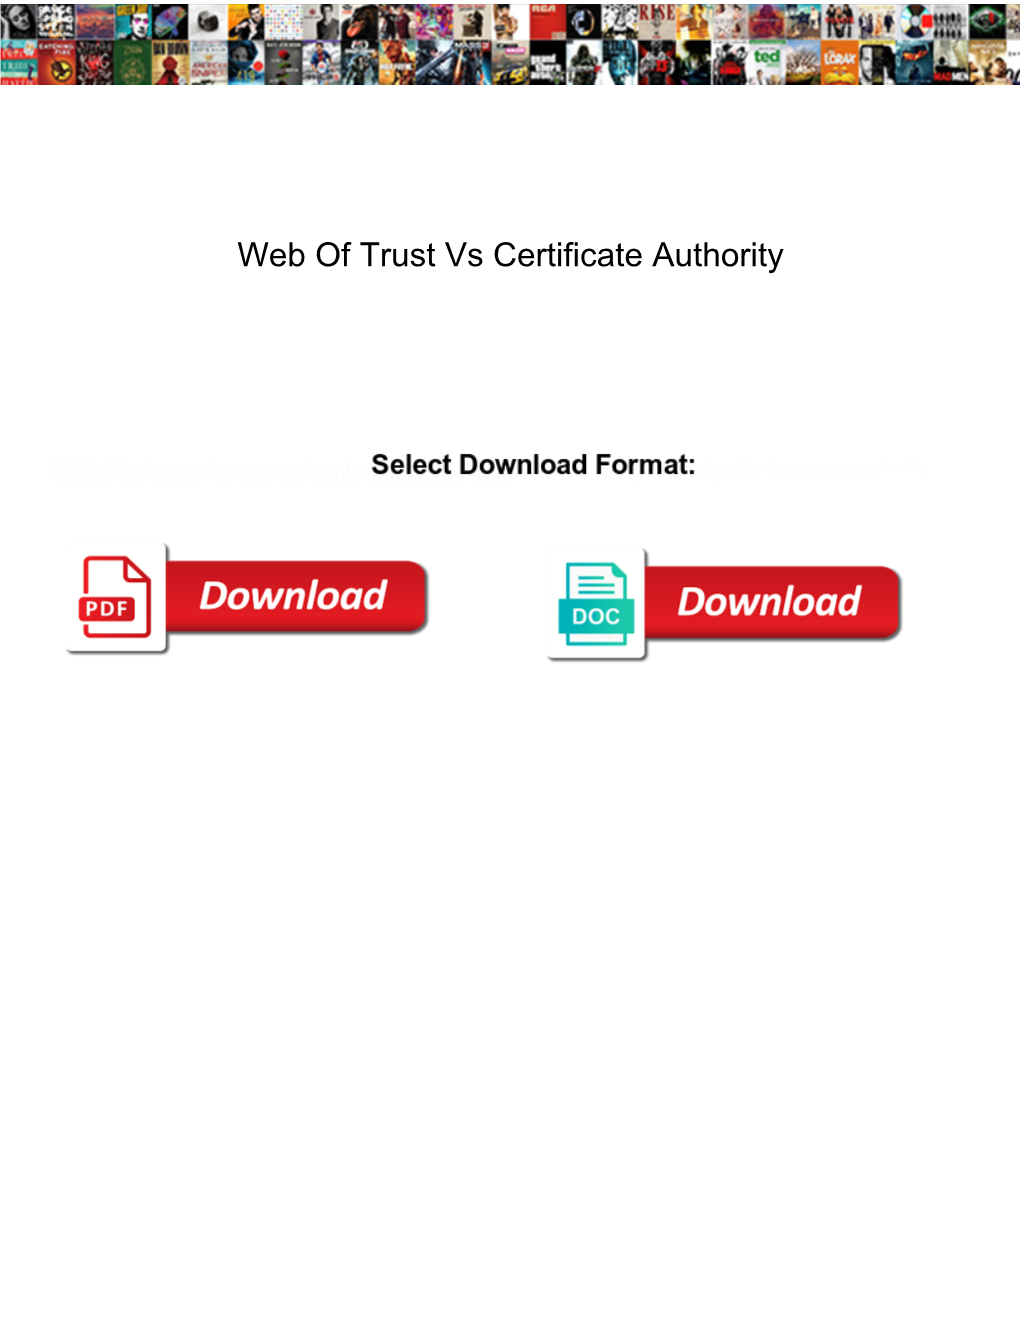 Web of Trust Vs Certificate Authority